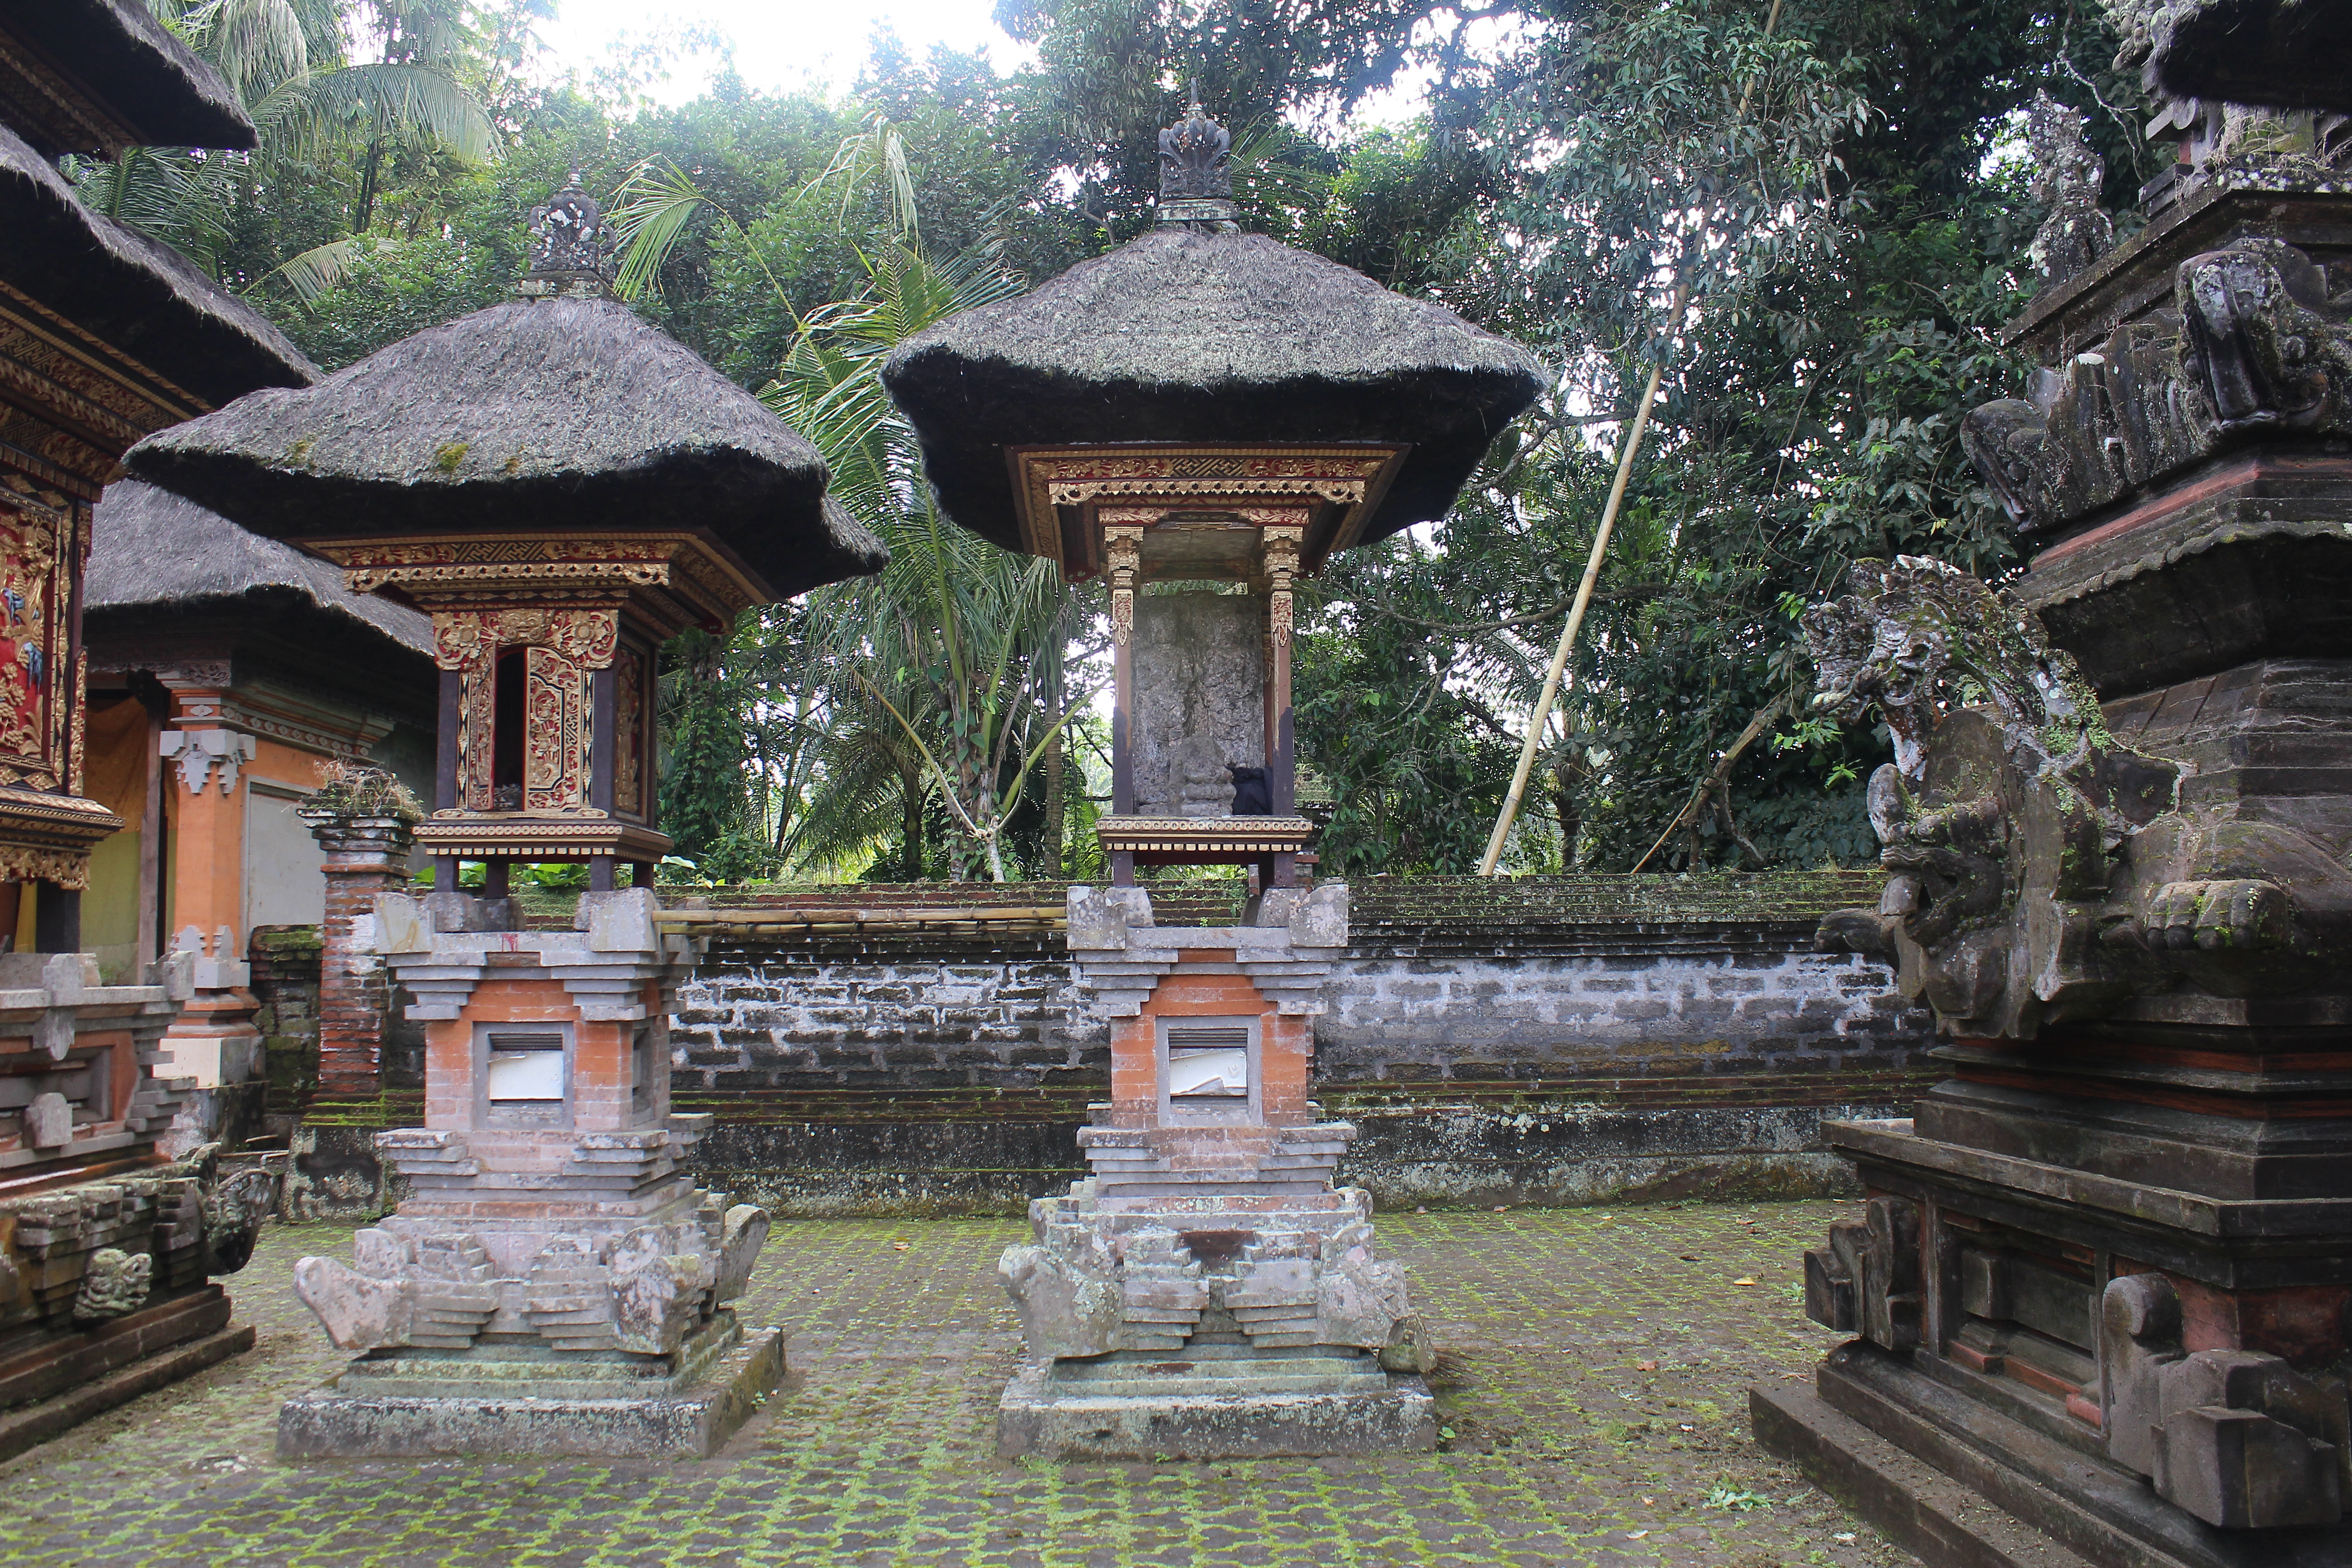 Pair of tall shrines